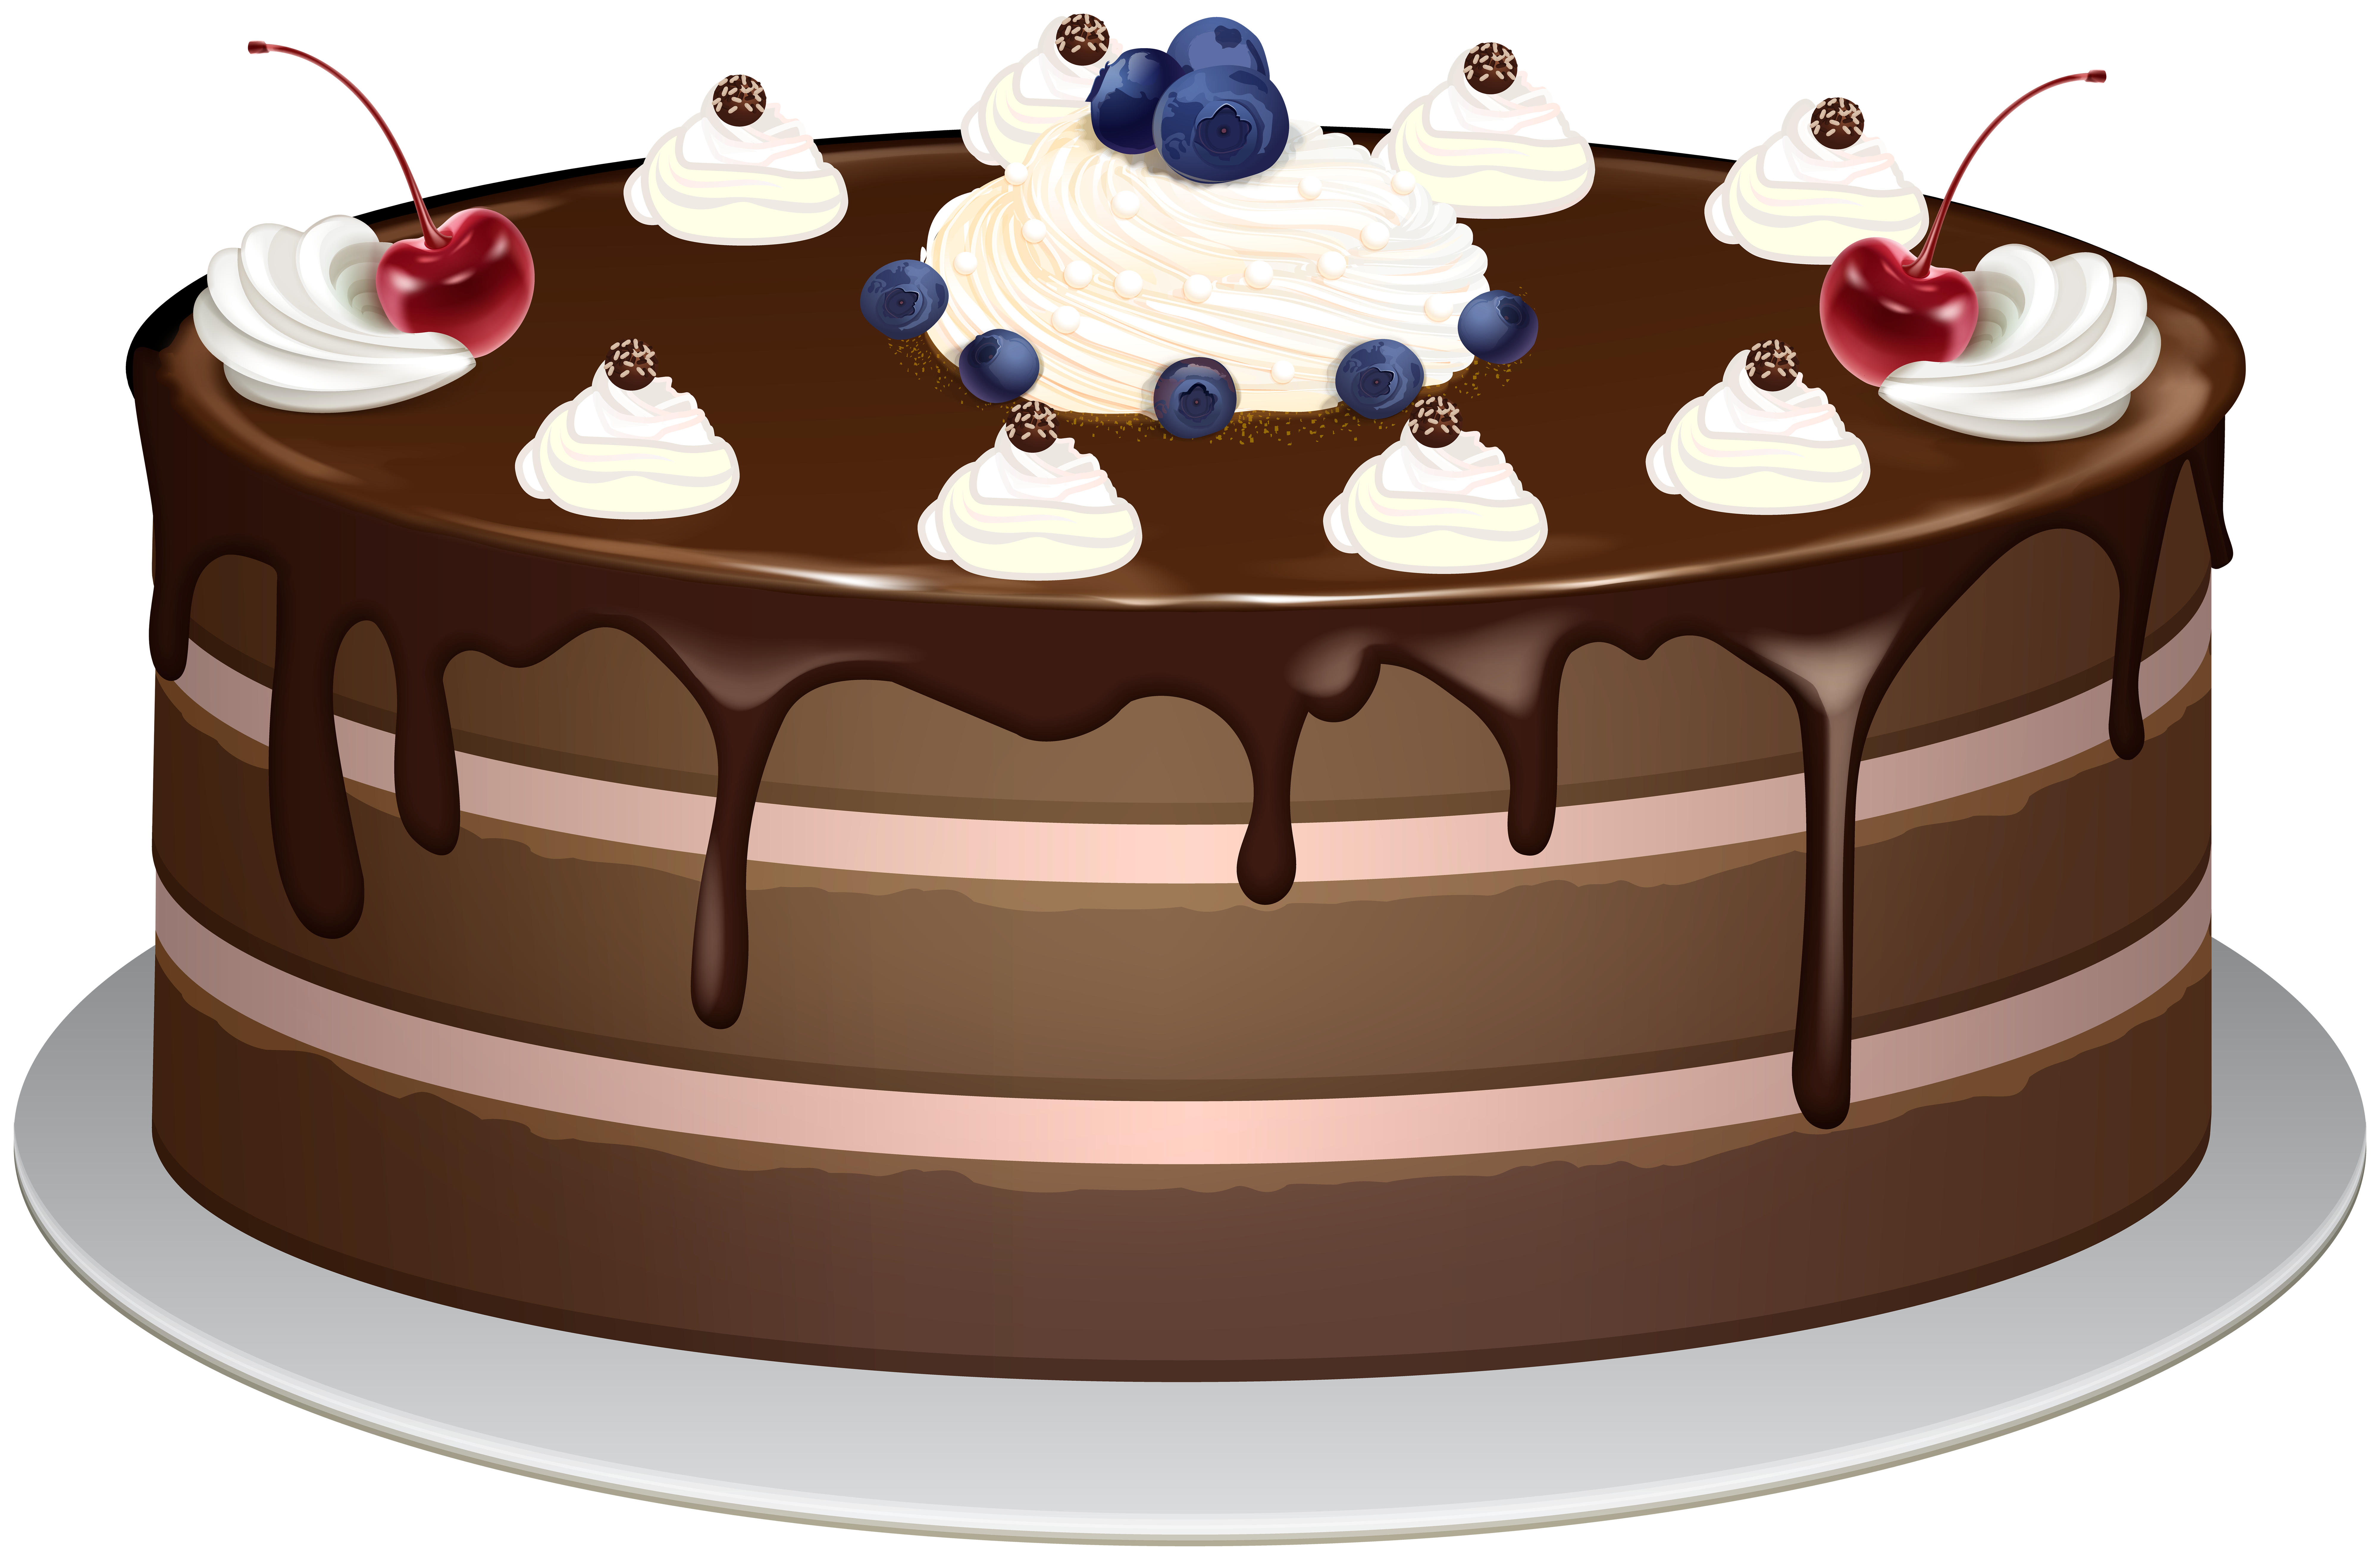 Nono's Vitto's Moist Chocolate Cake